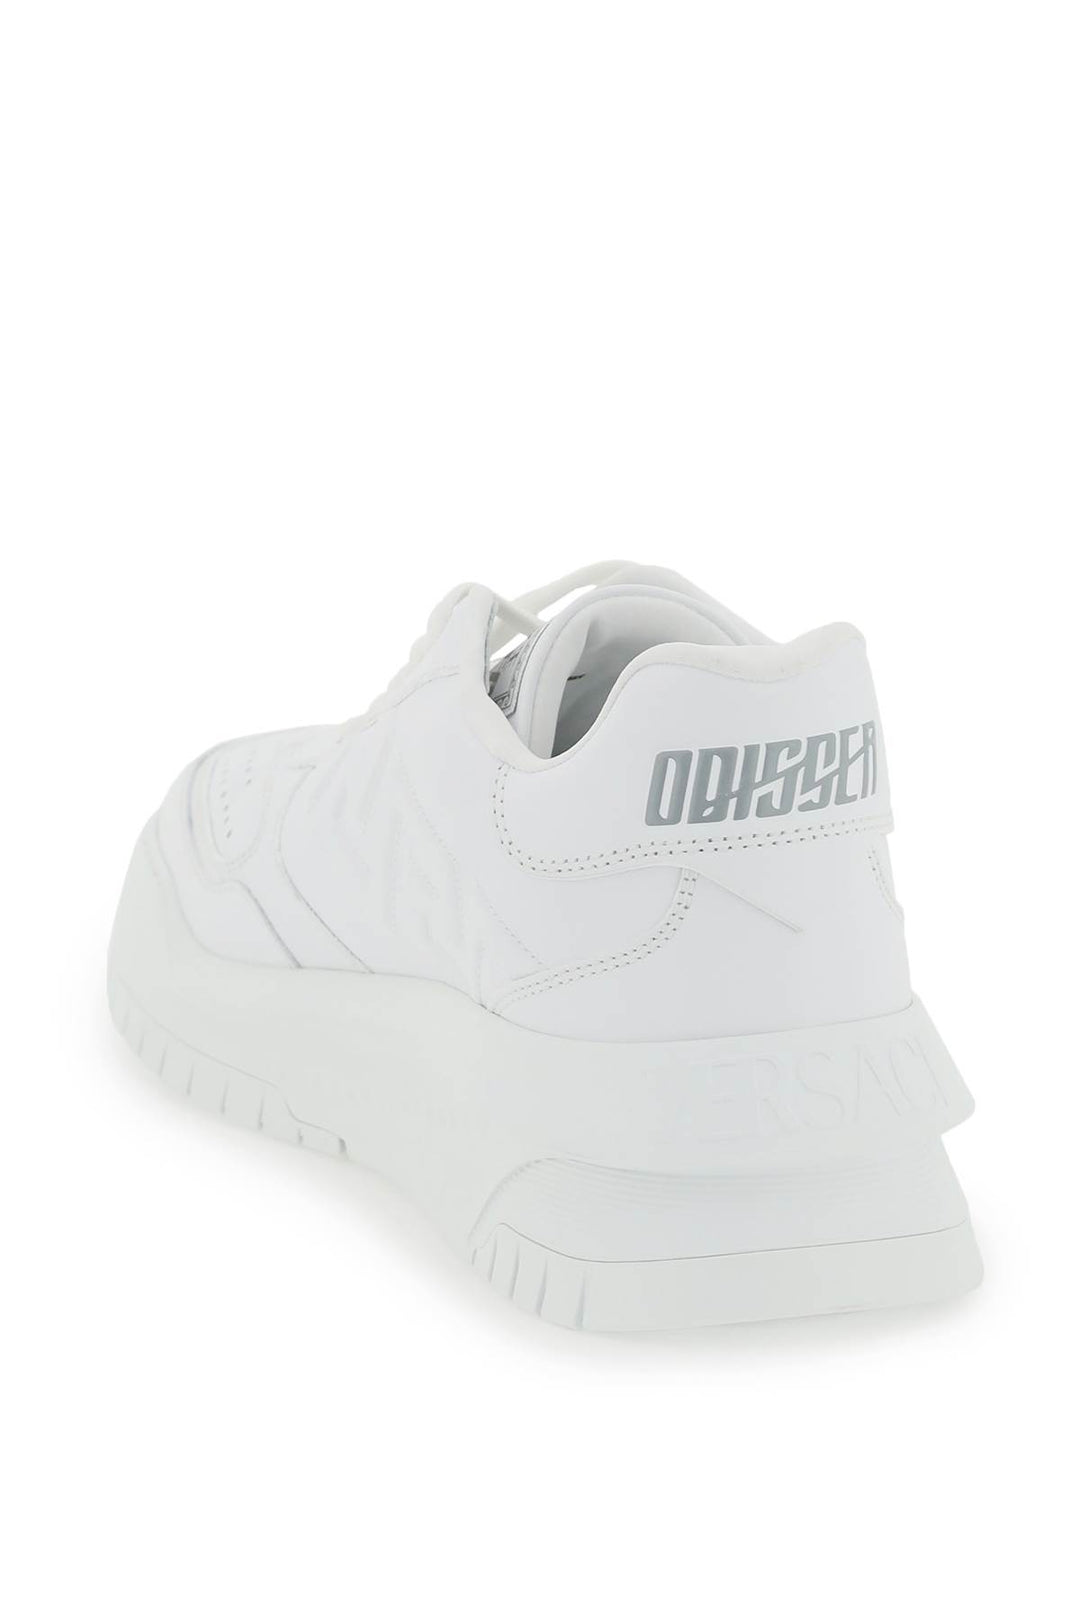 Versace Odissea Sneakers   Bianco